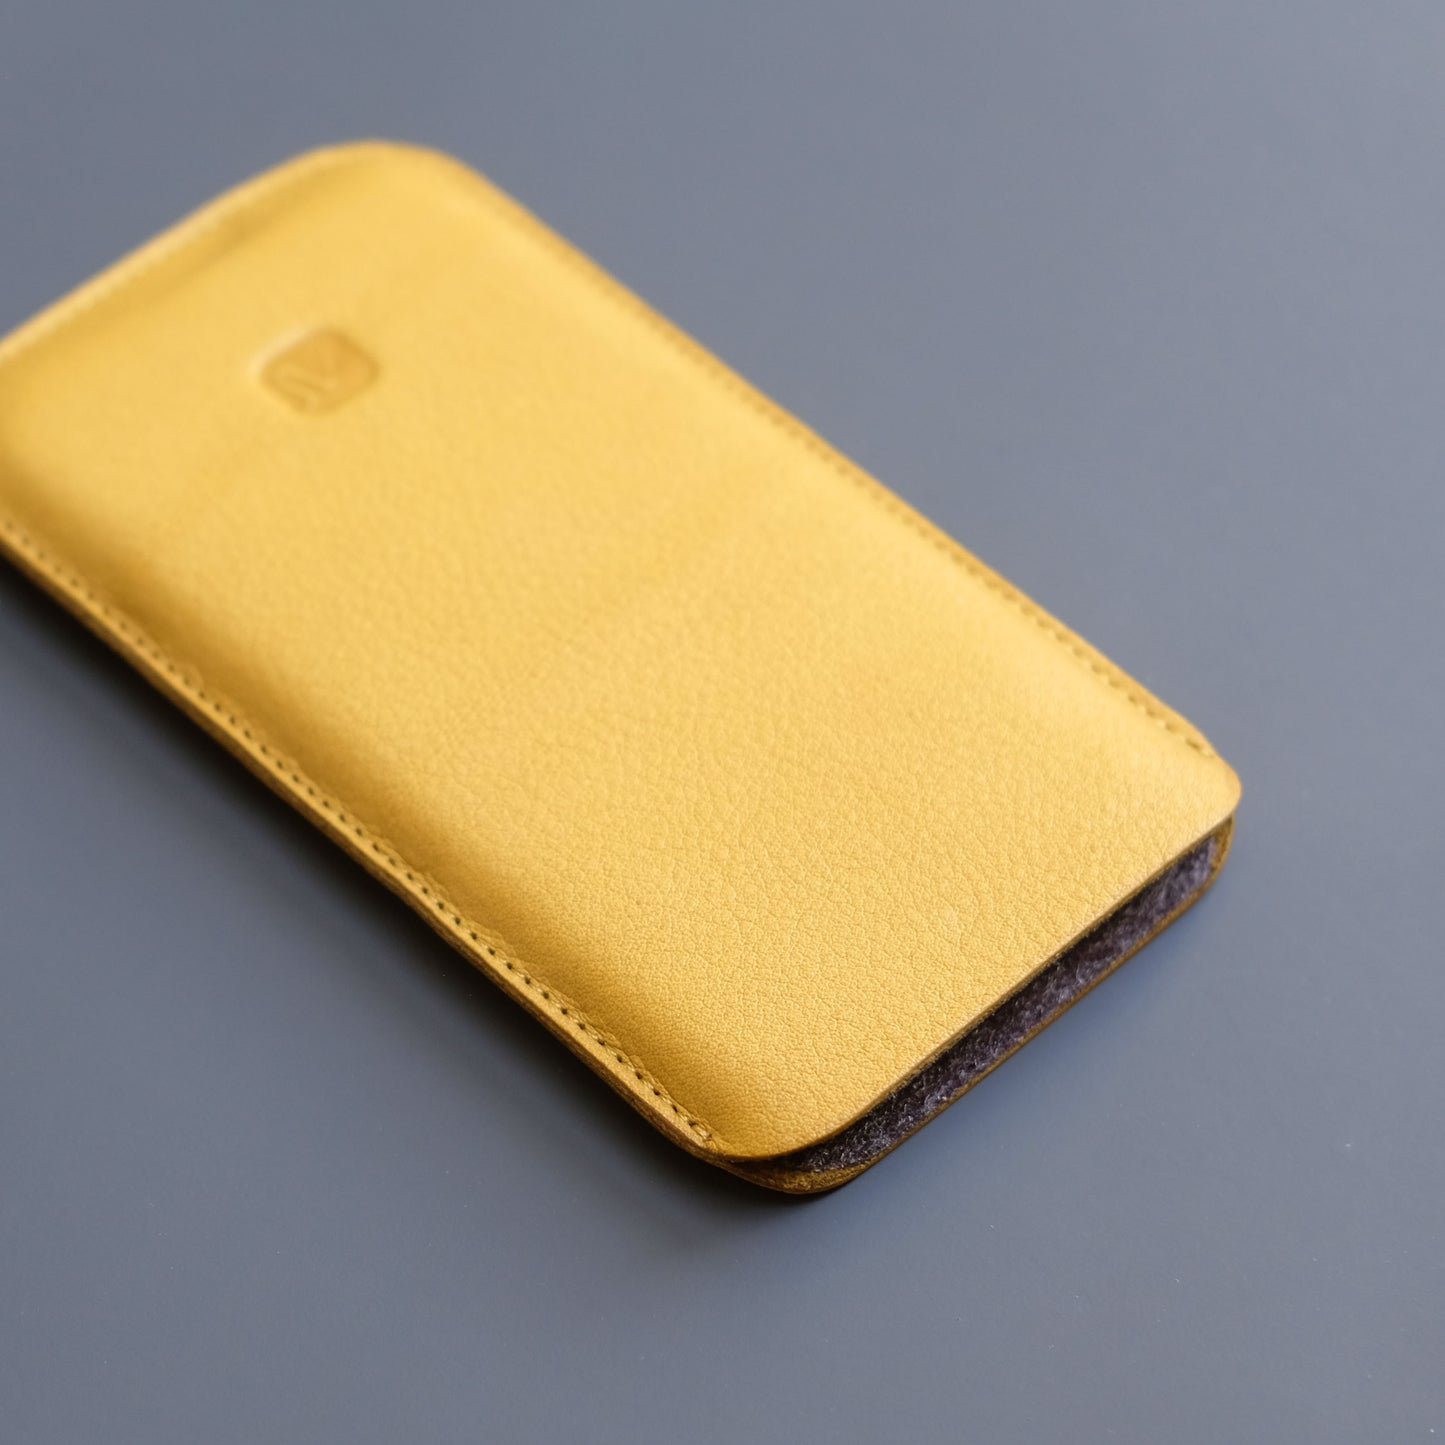 iPhone Hülle aus gelbem Leder mit grauem Filz Futter